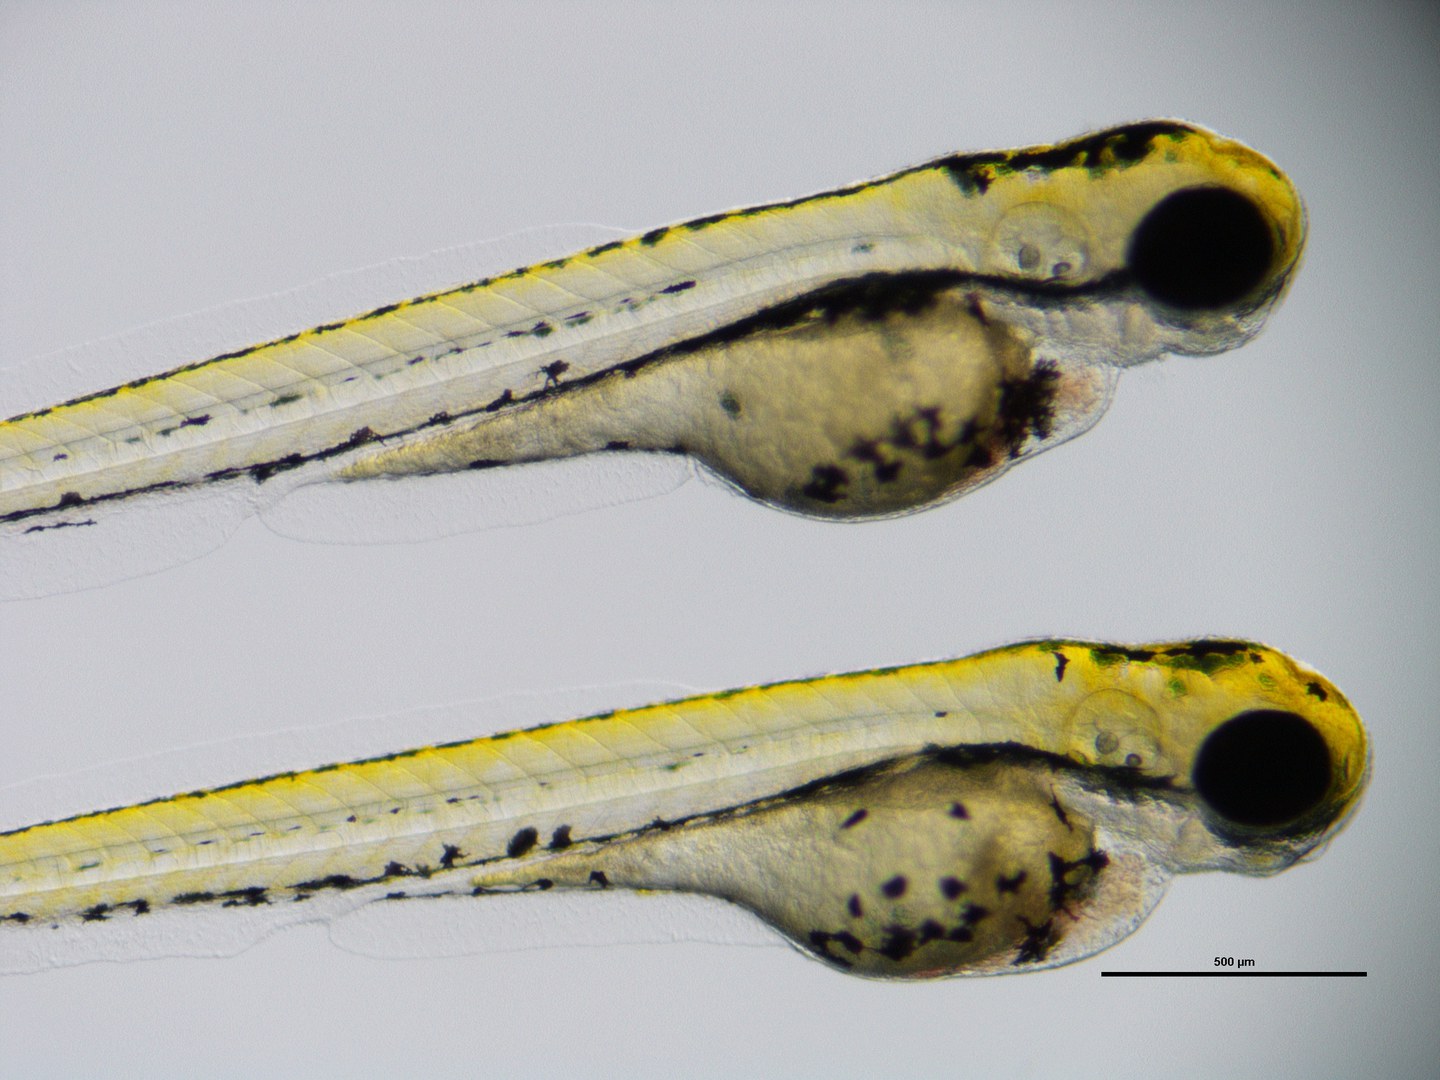 Zebrafish larvae